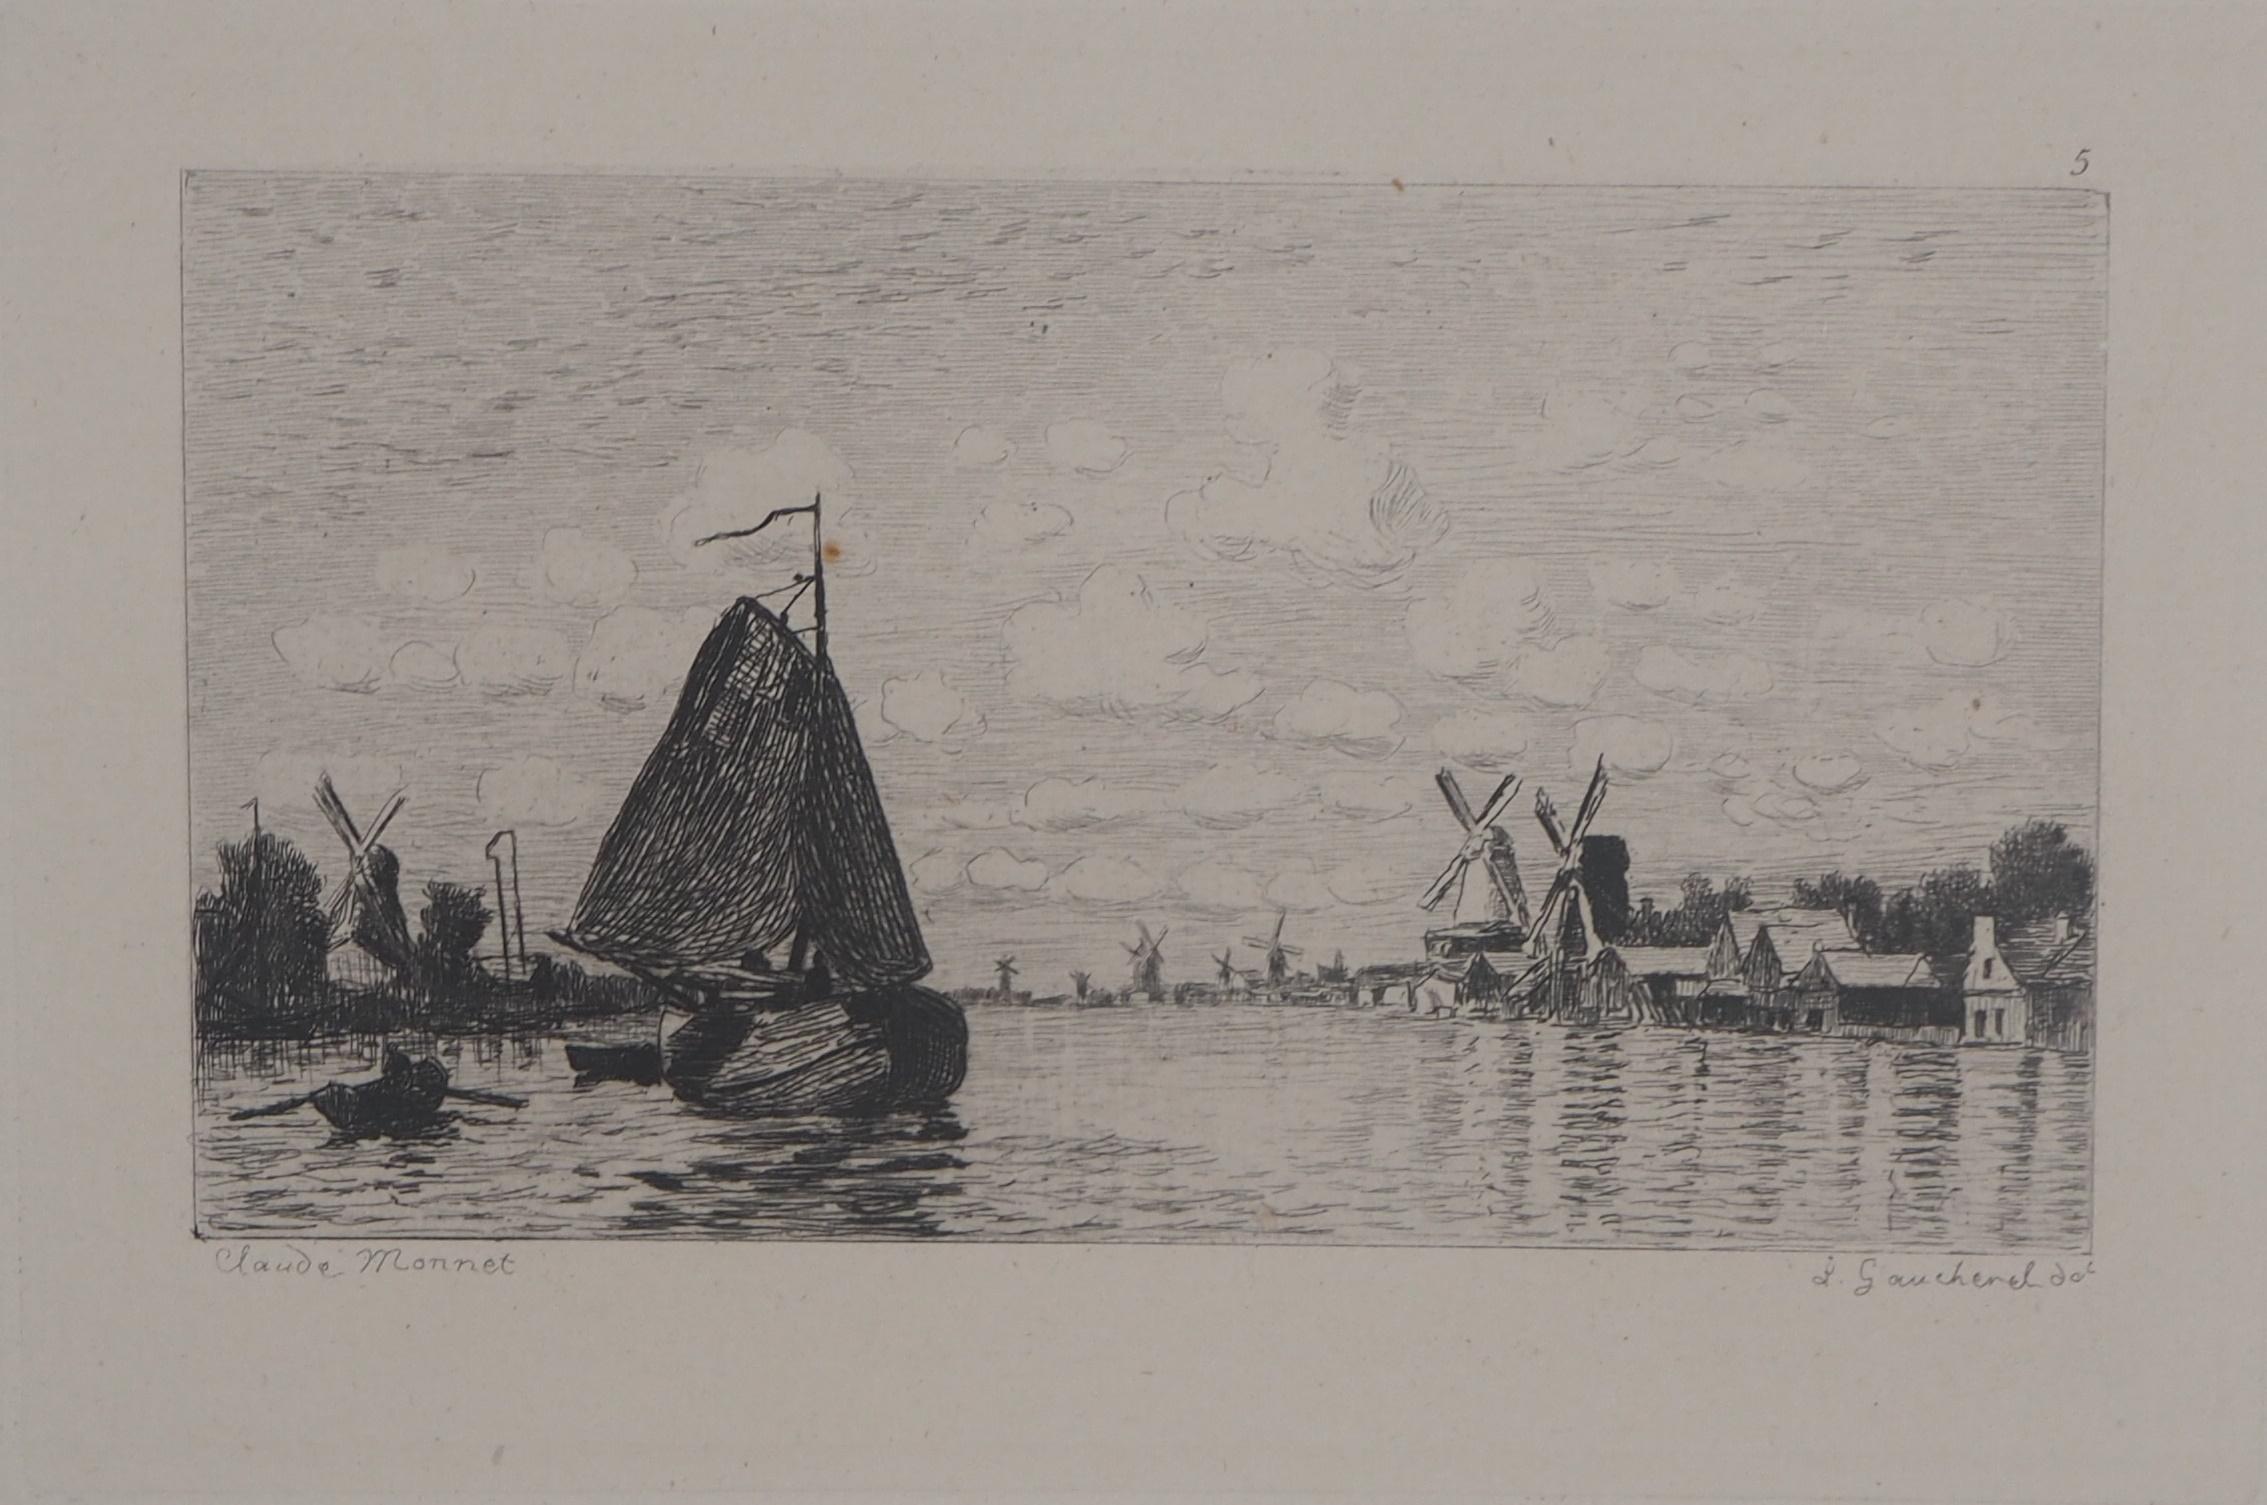 Claude Monet Landscape Print - Windmills in Holland - Original etching - Ed. Durand Ruel, 1873